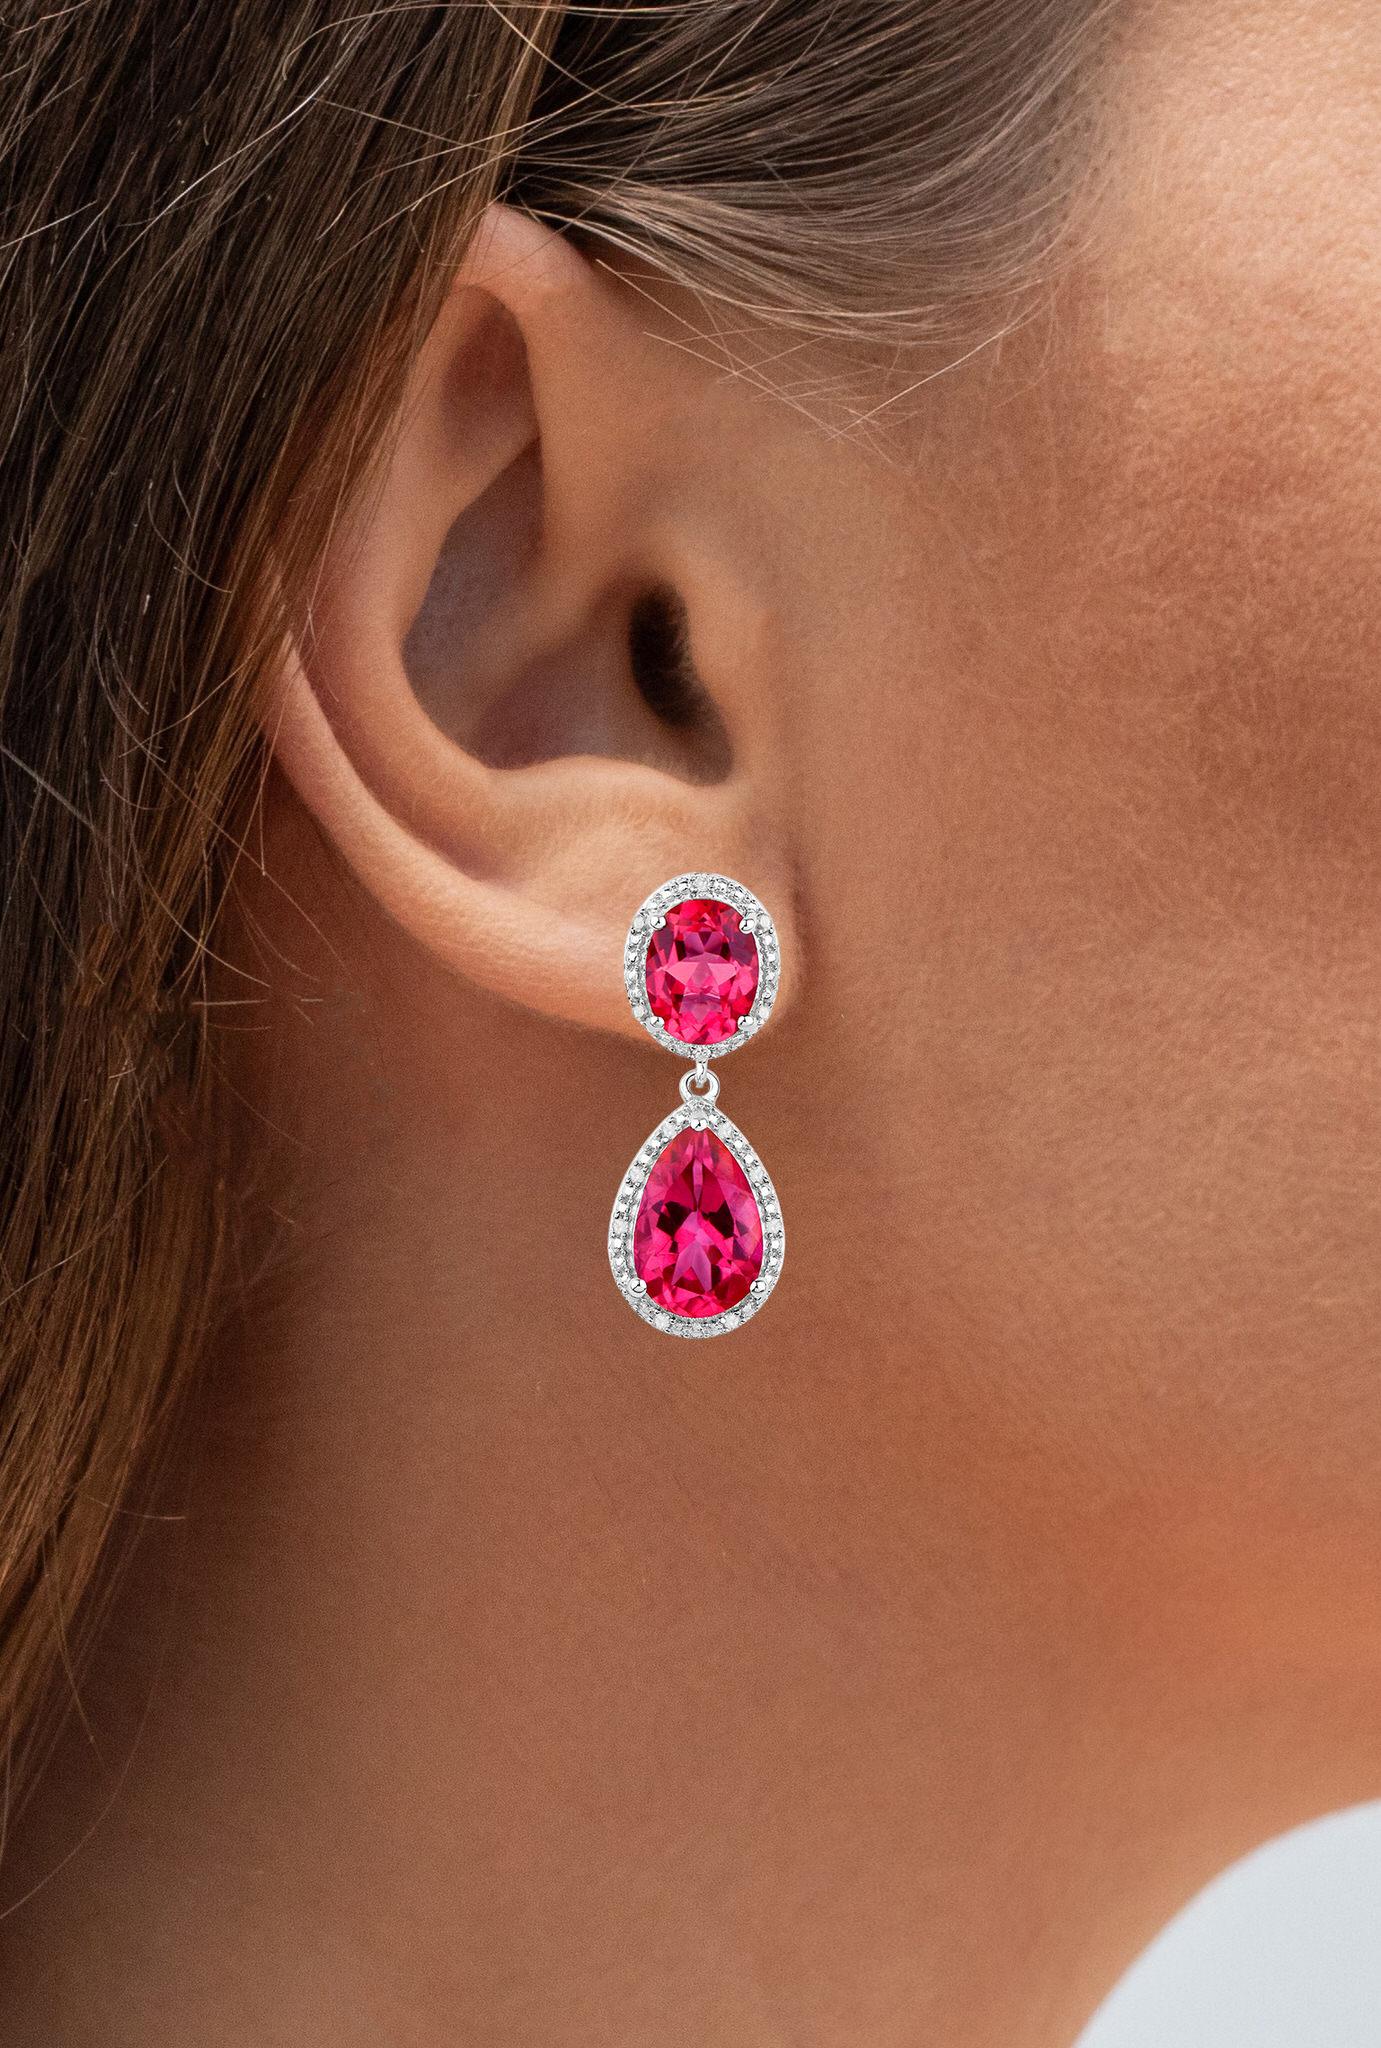 Pear Cut Hot Pink Topaz Earrings Diamond Setting 11.35 Carats Total